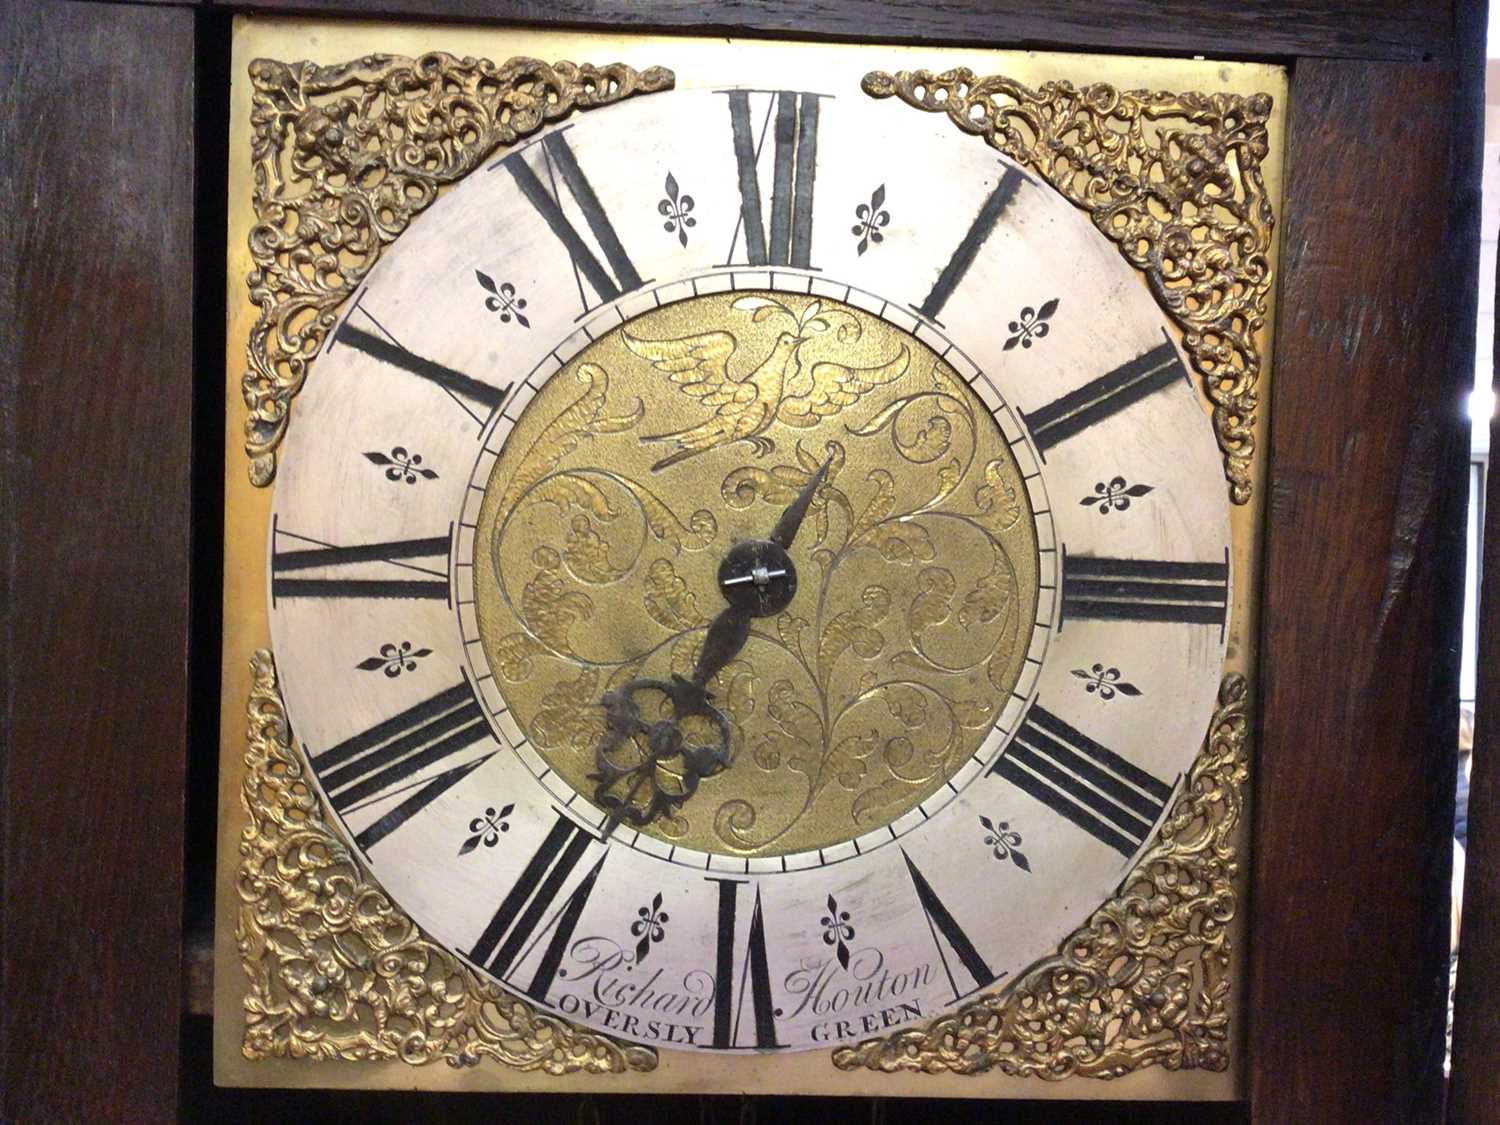 18th century 30 hour longcase clock by Richard Houston, Oversly Green - Image 3 of 12